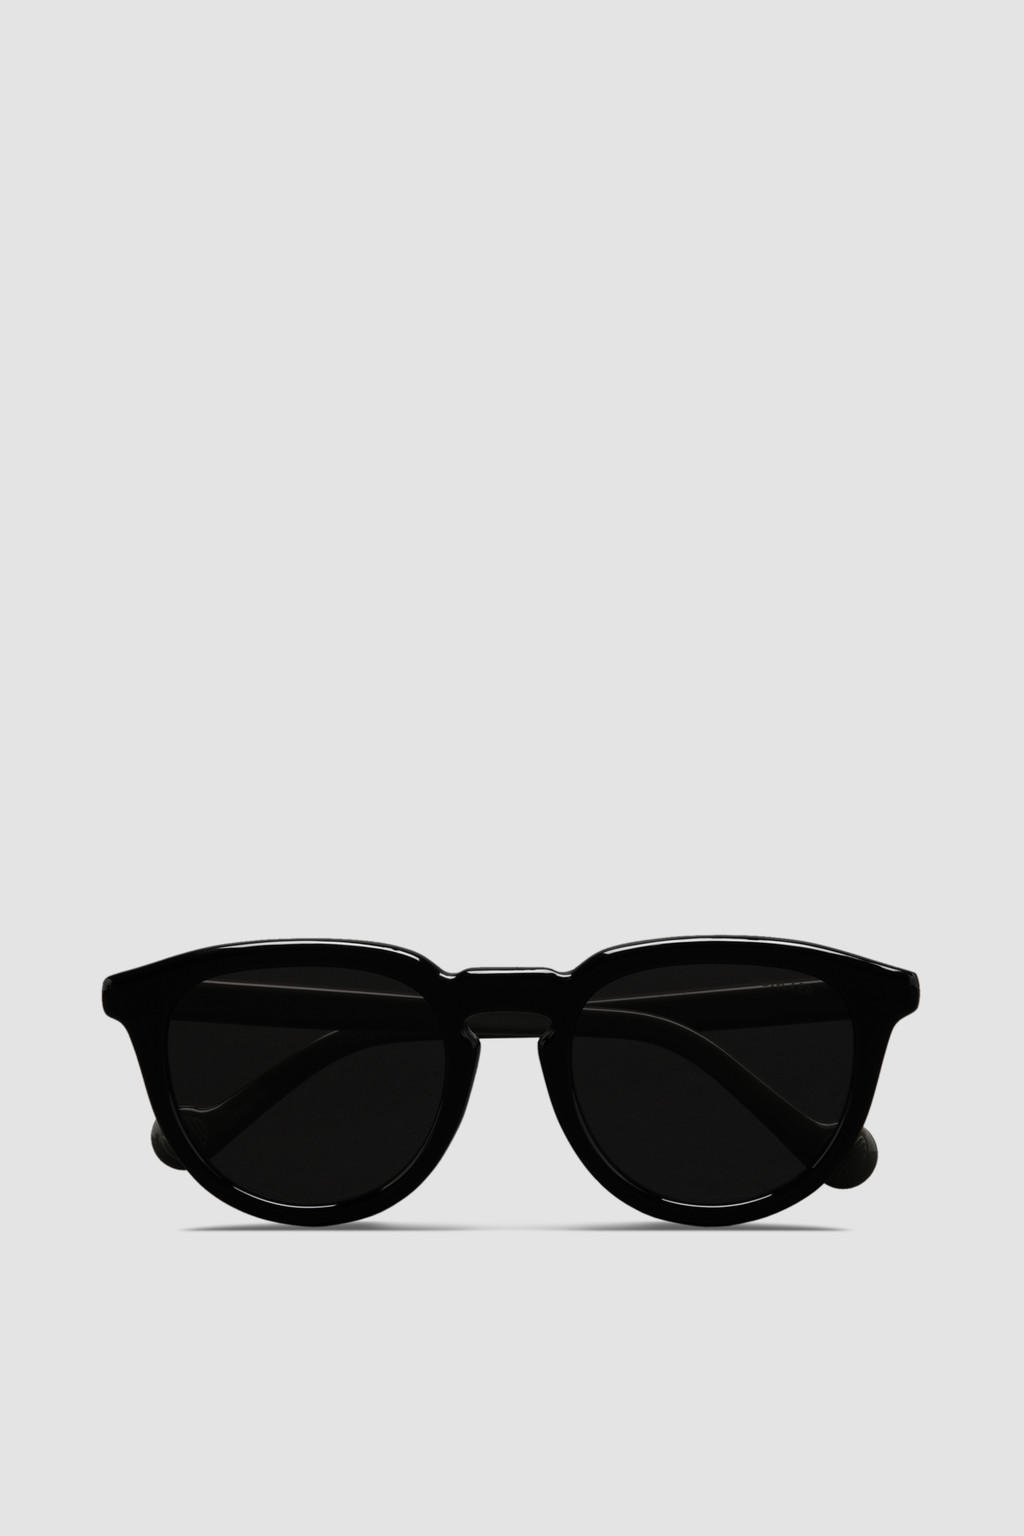 Best Glasses iPhone X HD Wallpapers - iLikeWallpaper